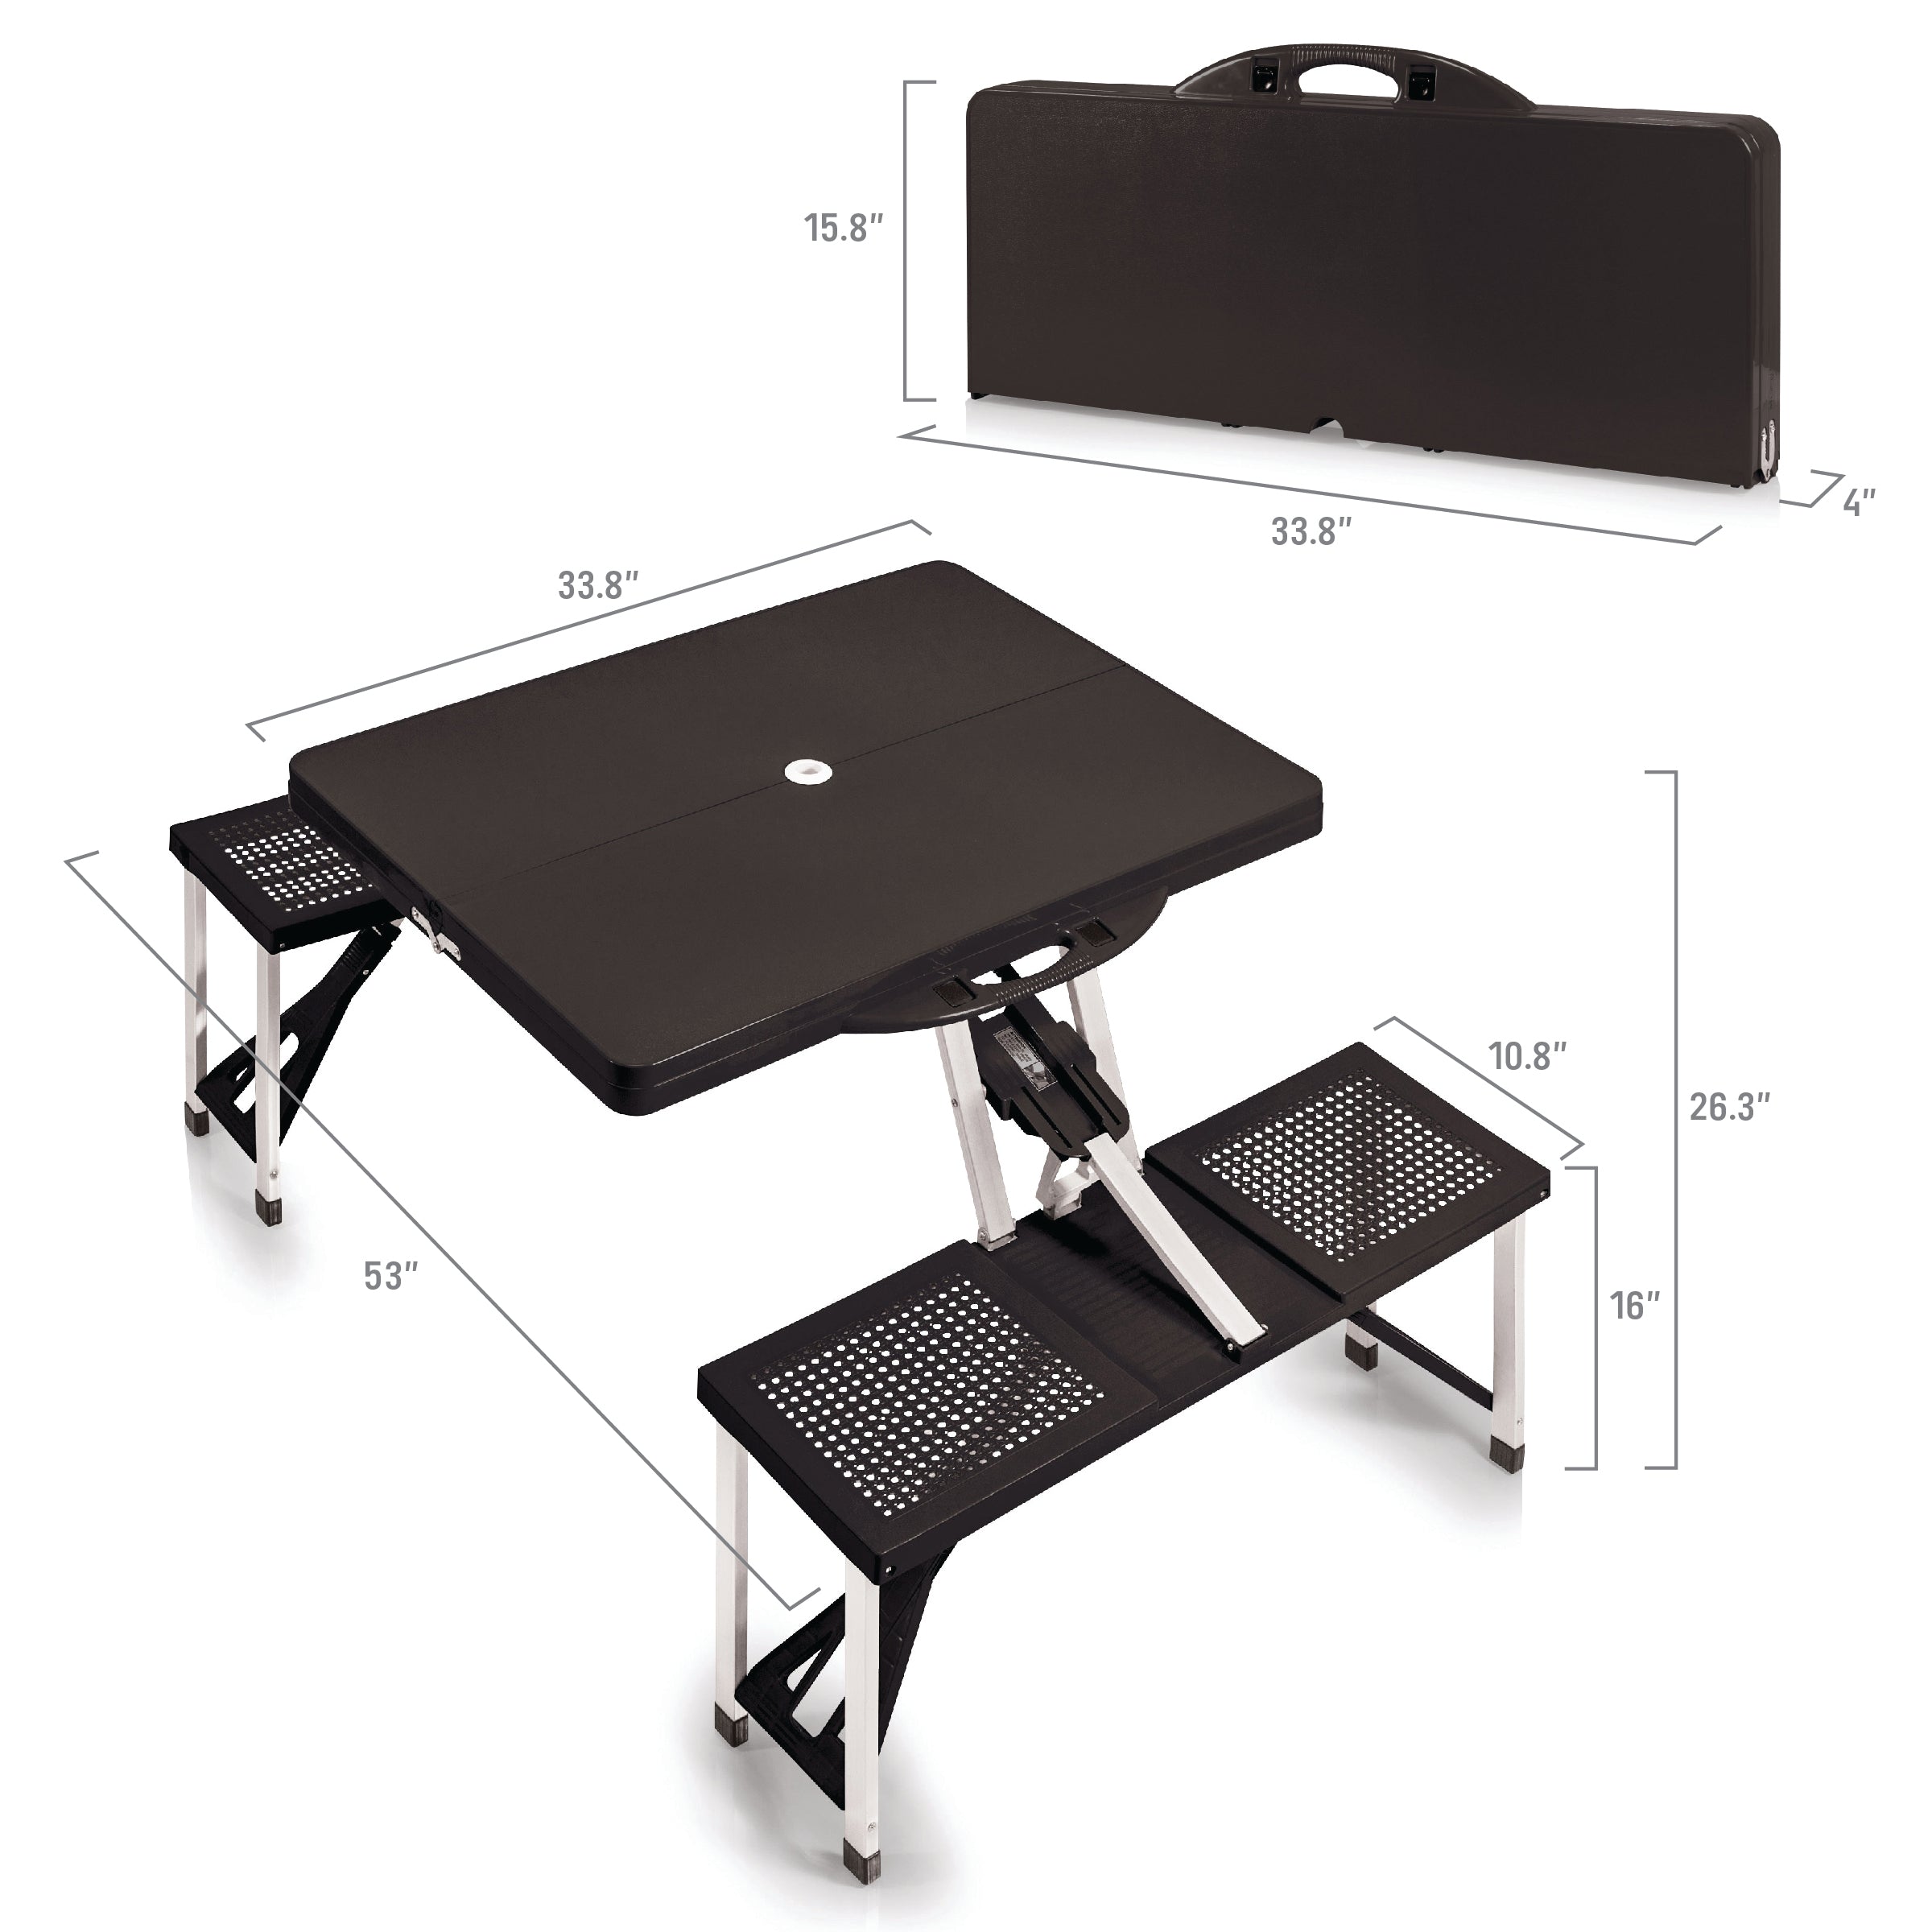 Football Field - Washington Huskies - Picnic Table Portable Folding Table with Seats